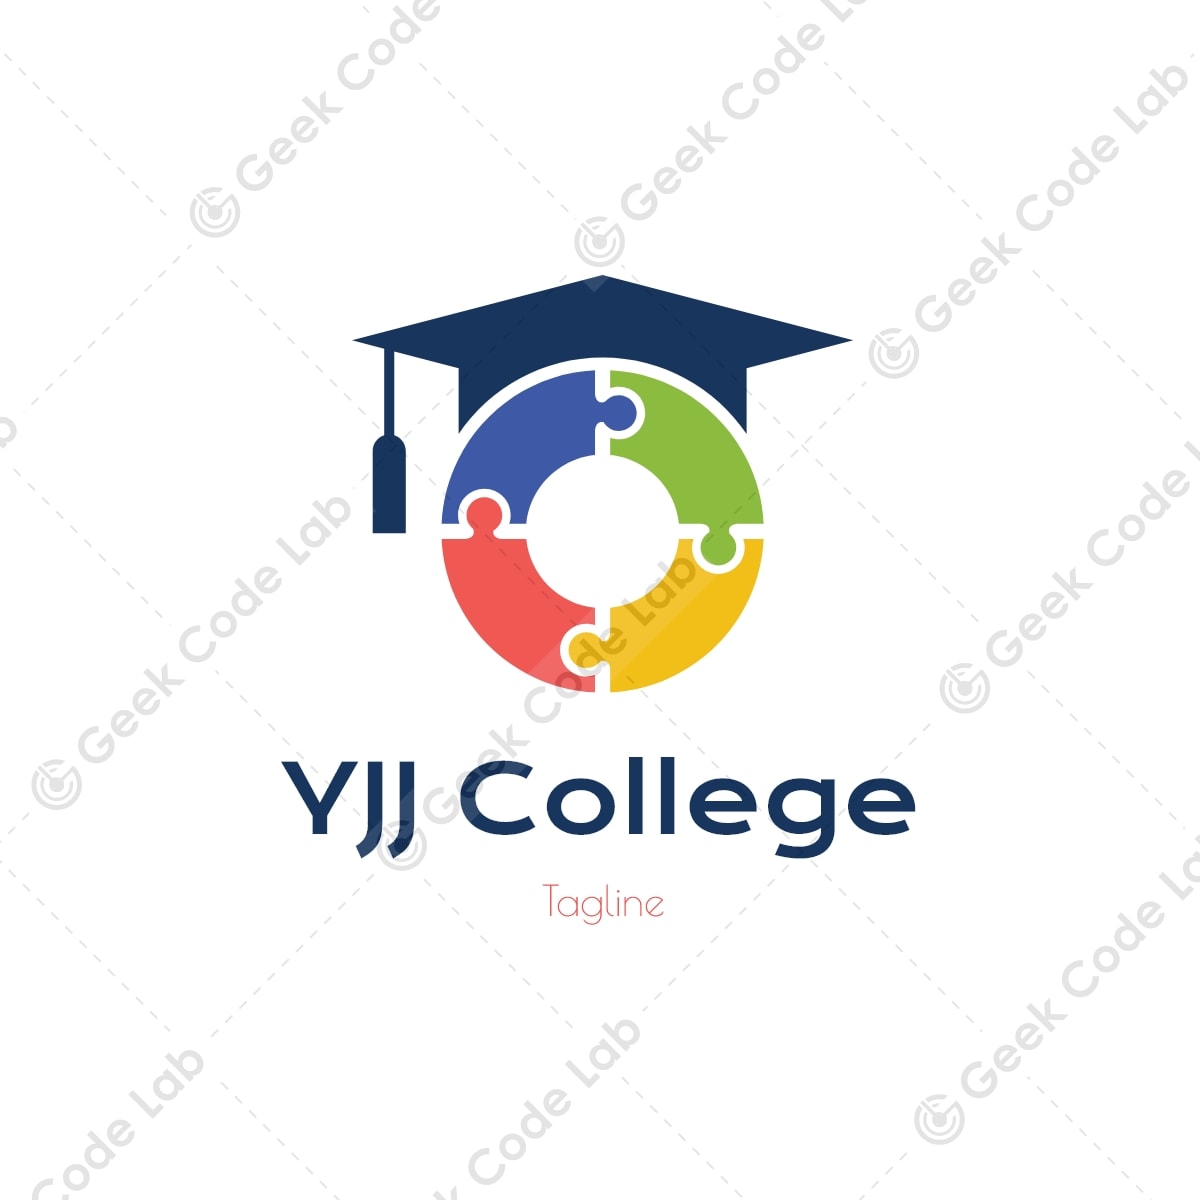 YJJ College